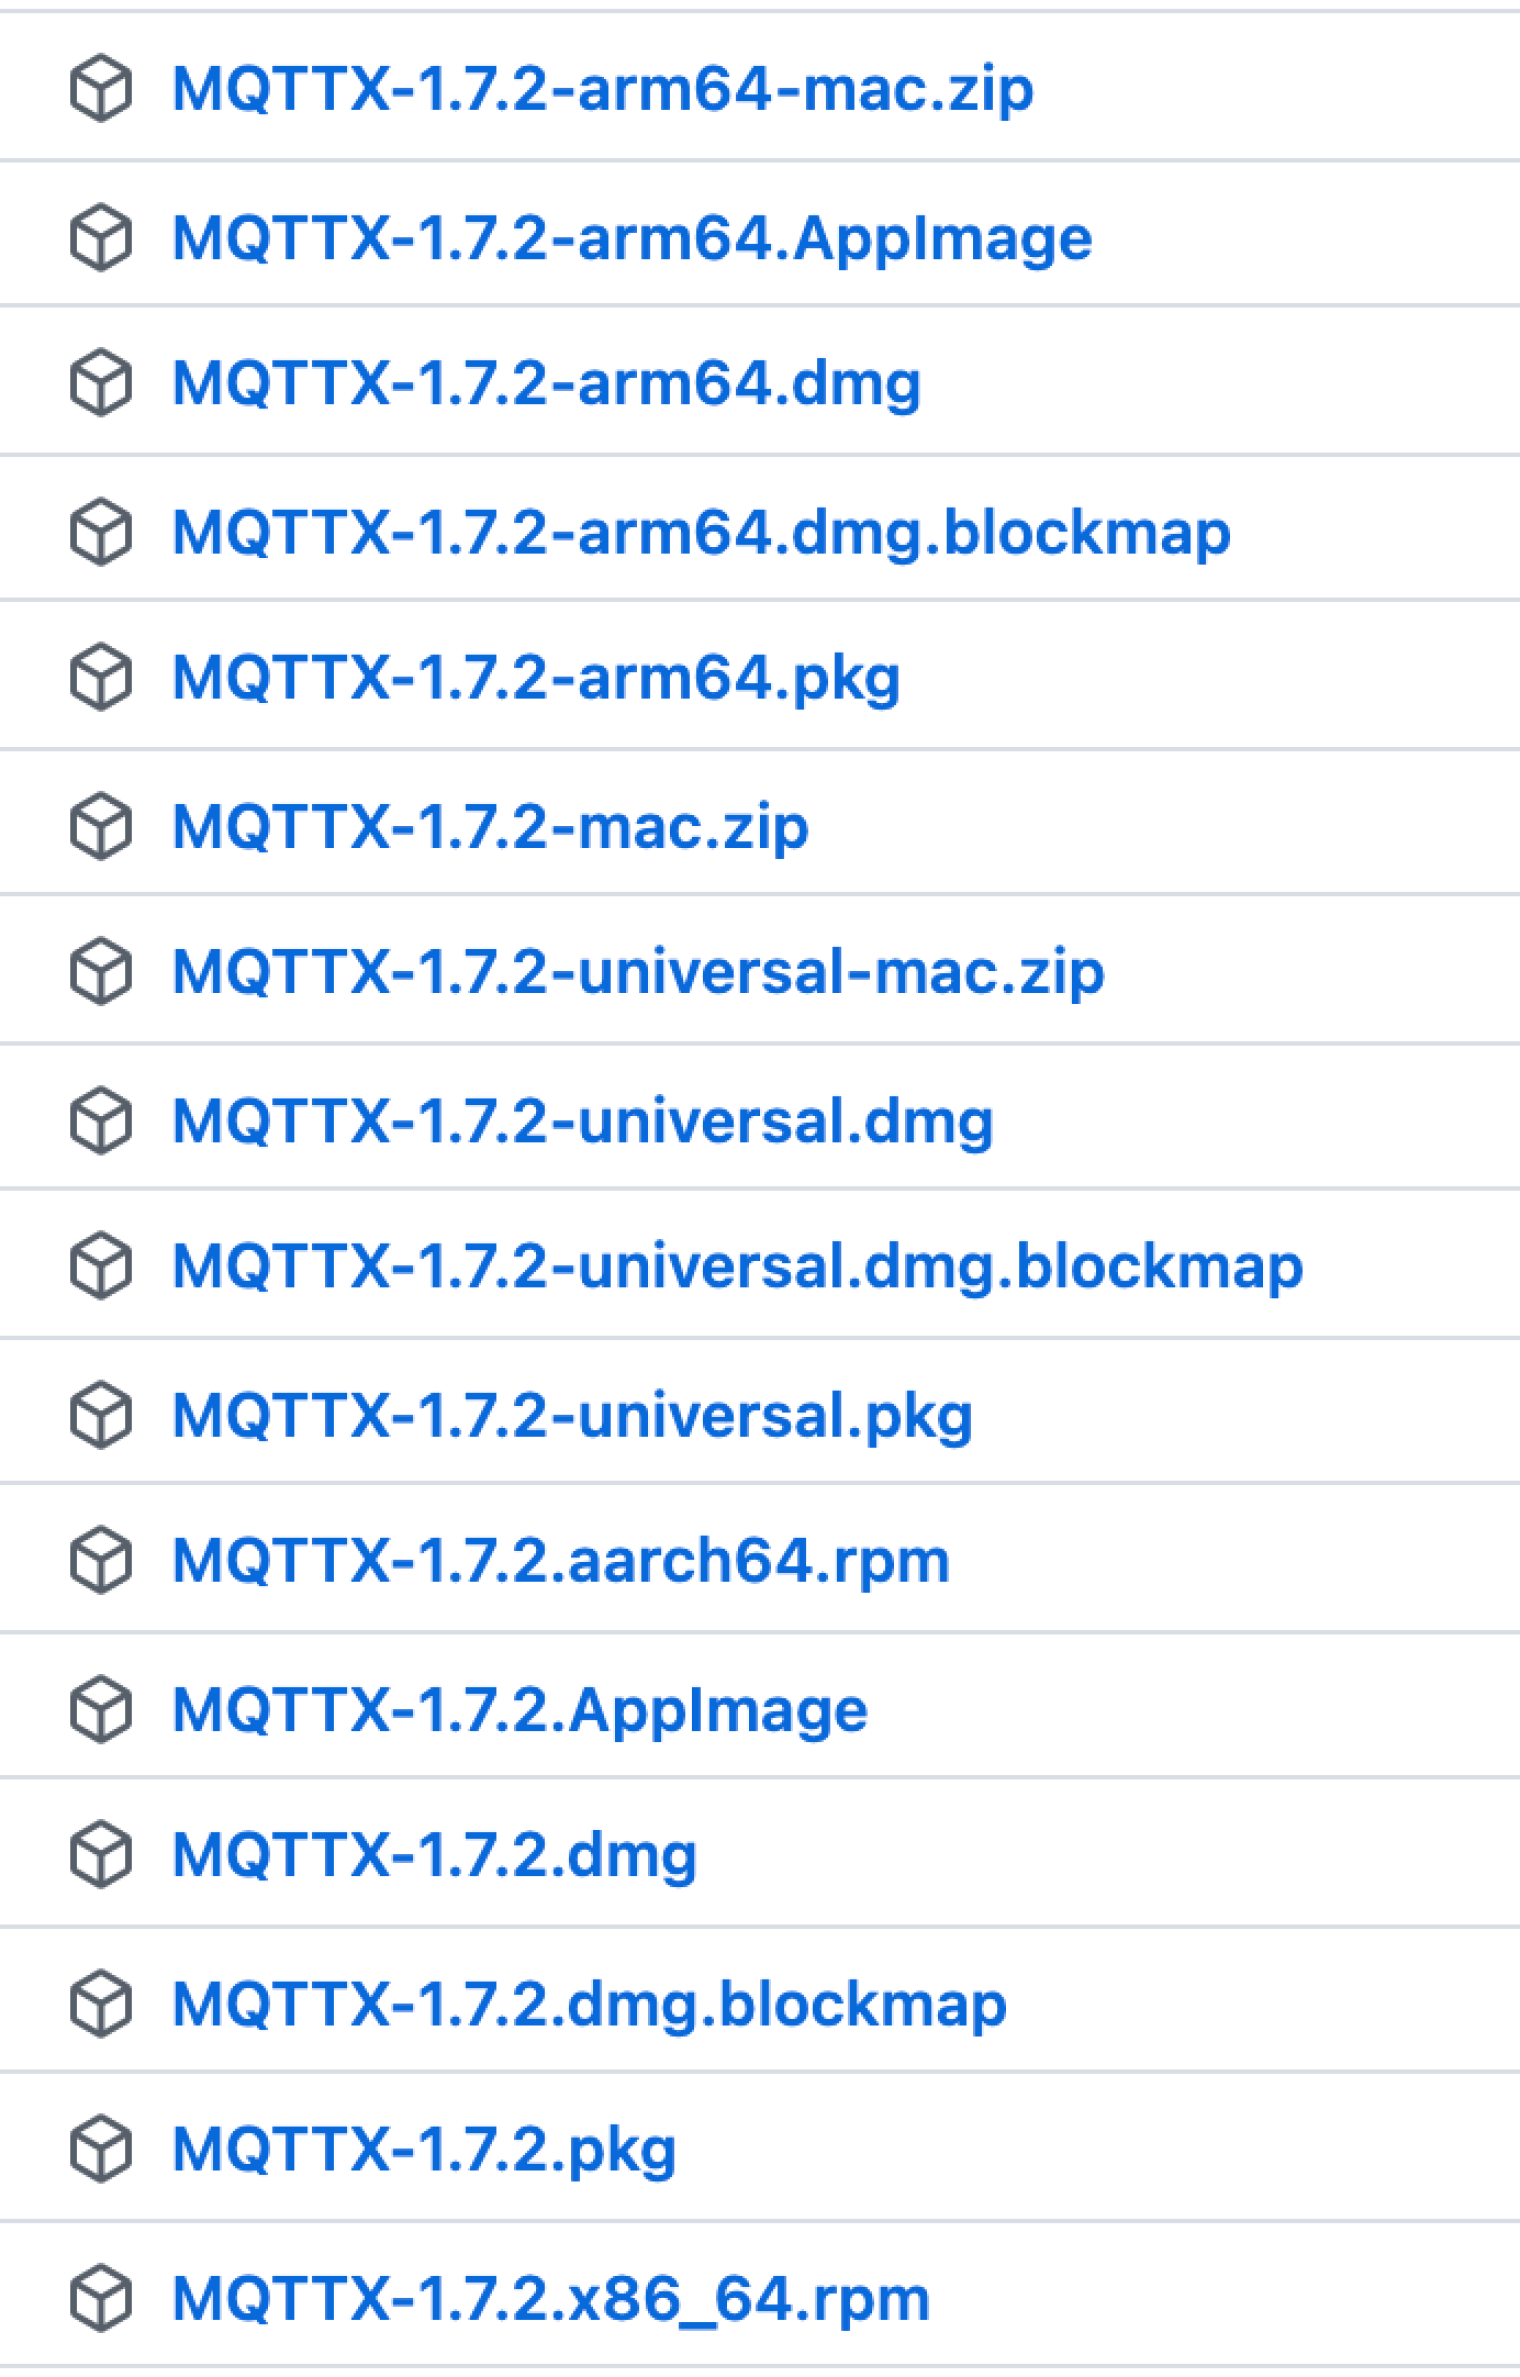 MQTTX add more ARM builds